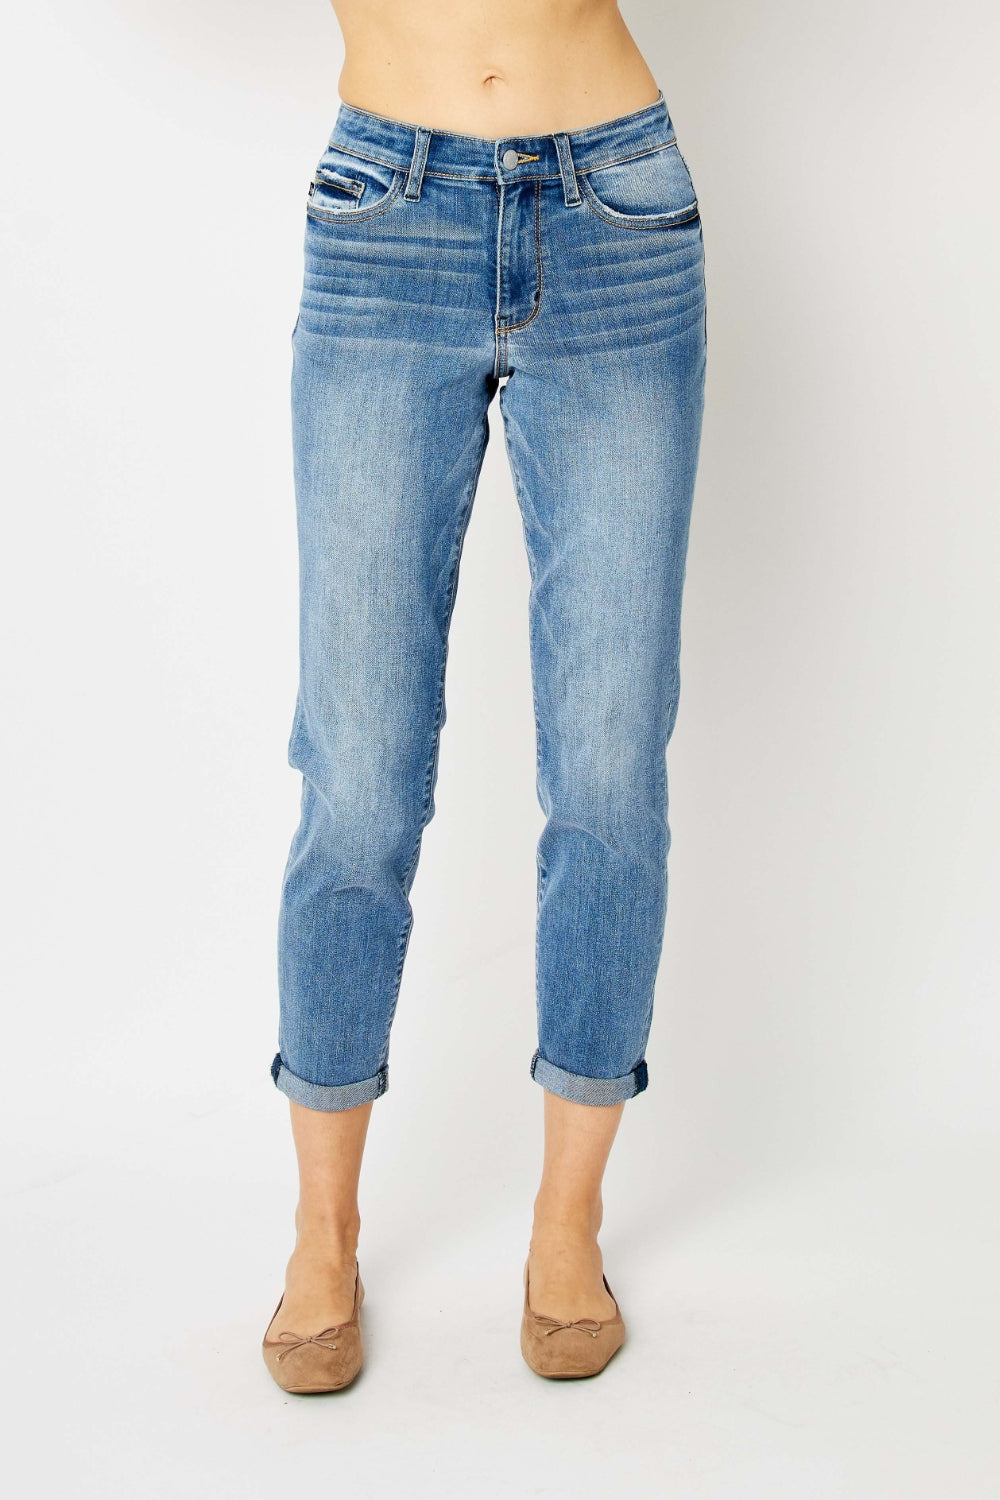 Judy Blue Full Size Cuffed Hem Slim Jeans pants Krazy Heart Designs Boutique Medium 0(24) 